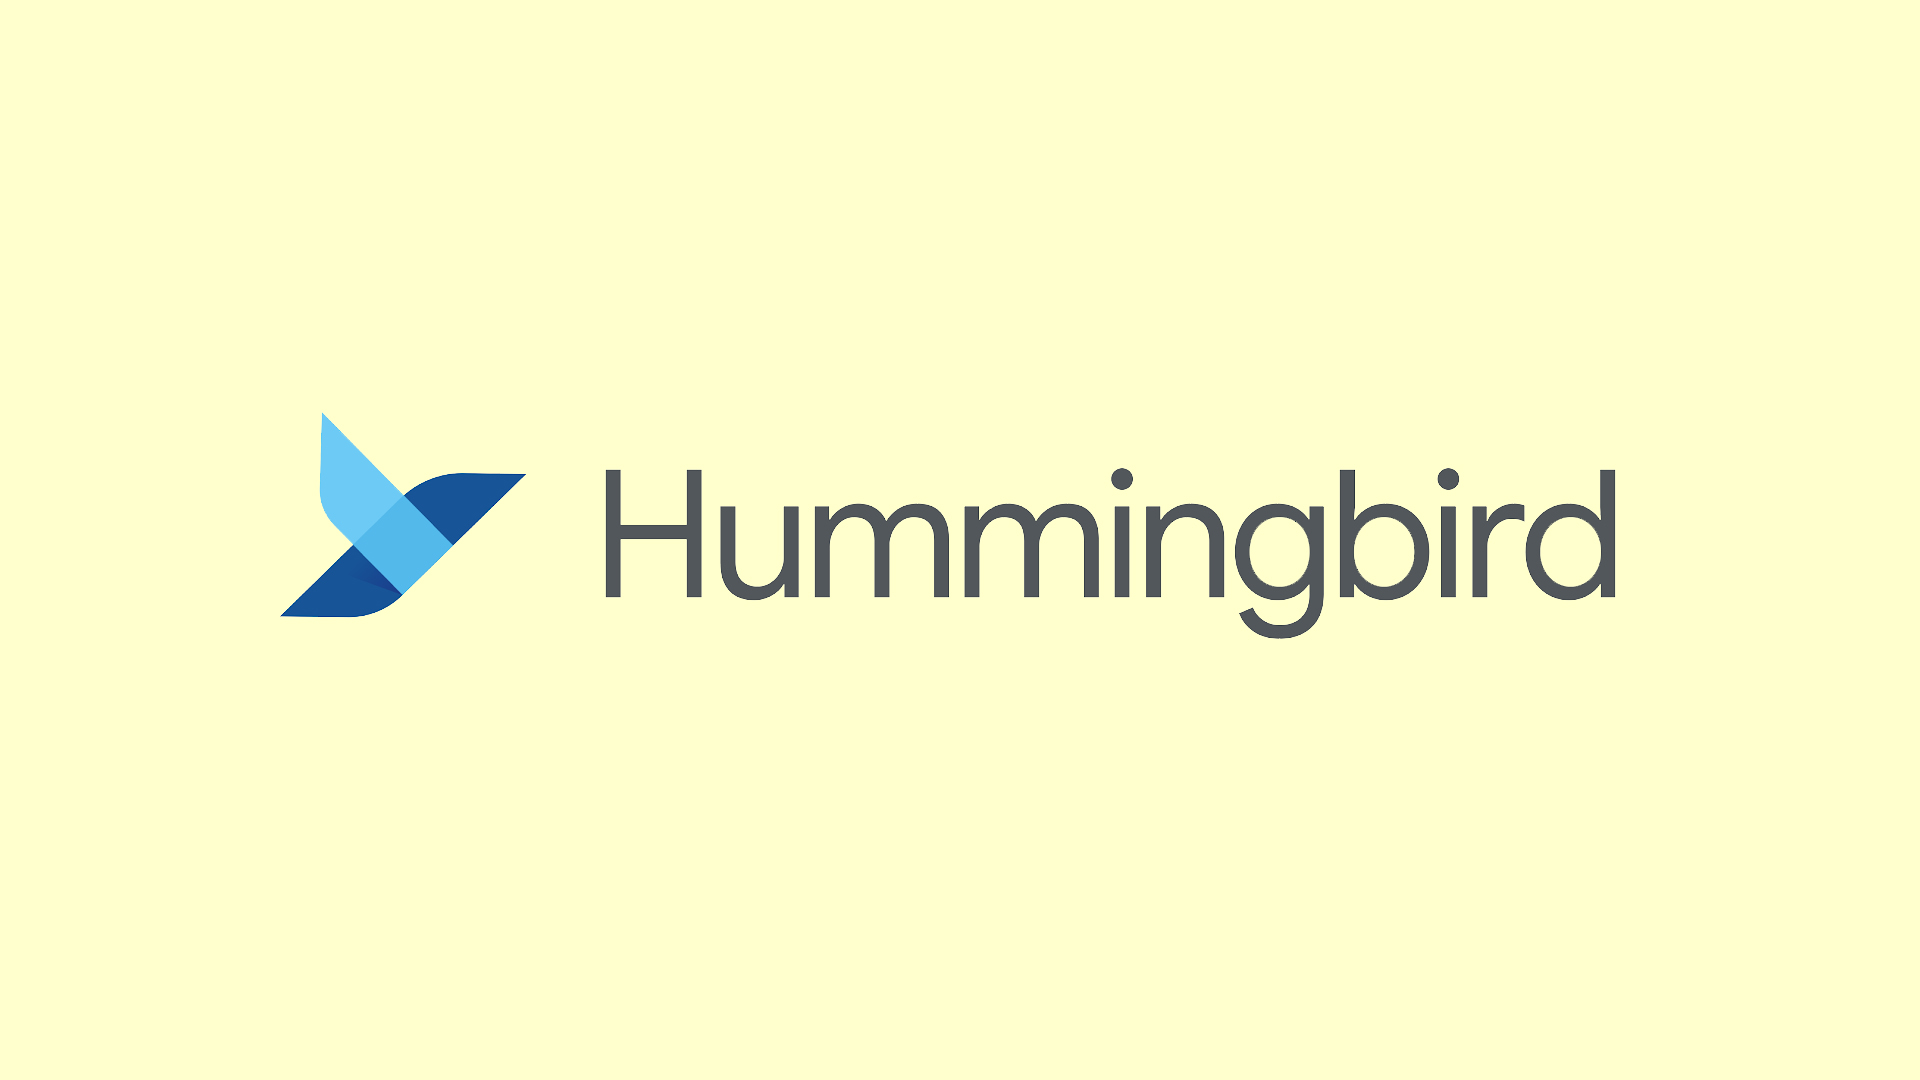 The logo of Google Hummingbird.